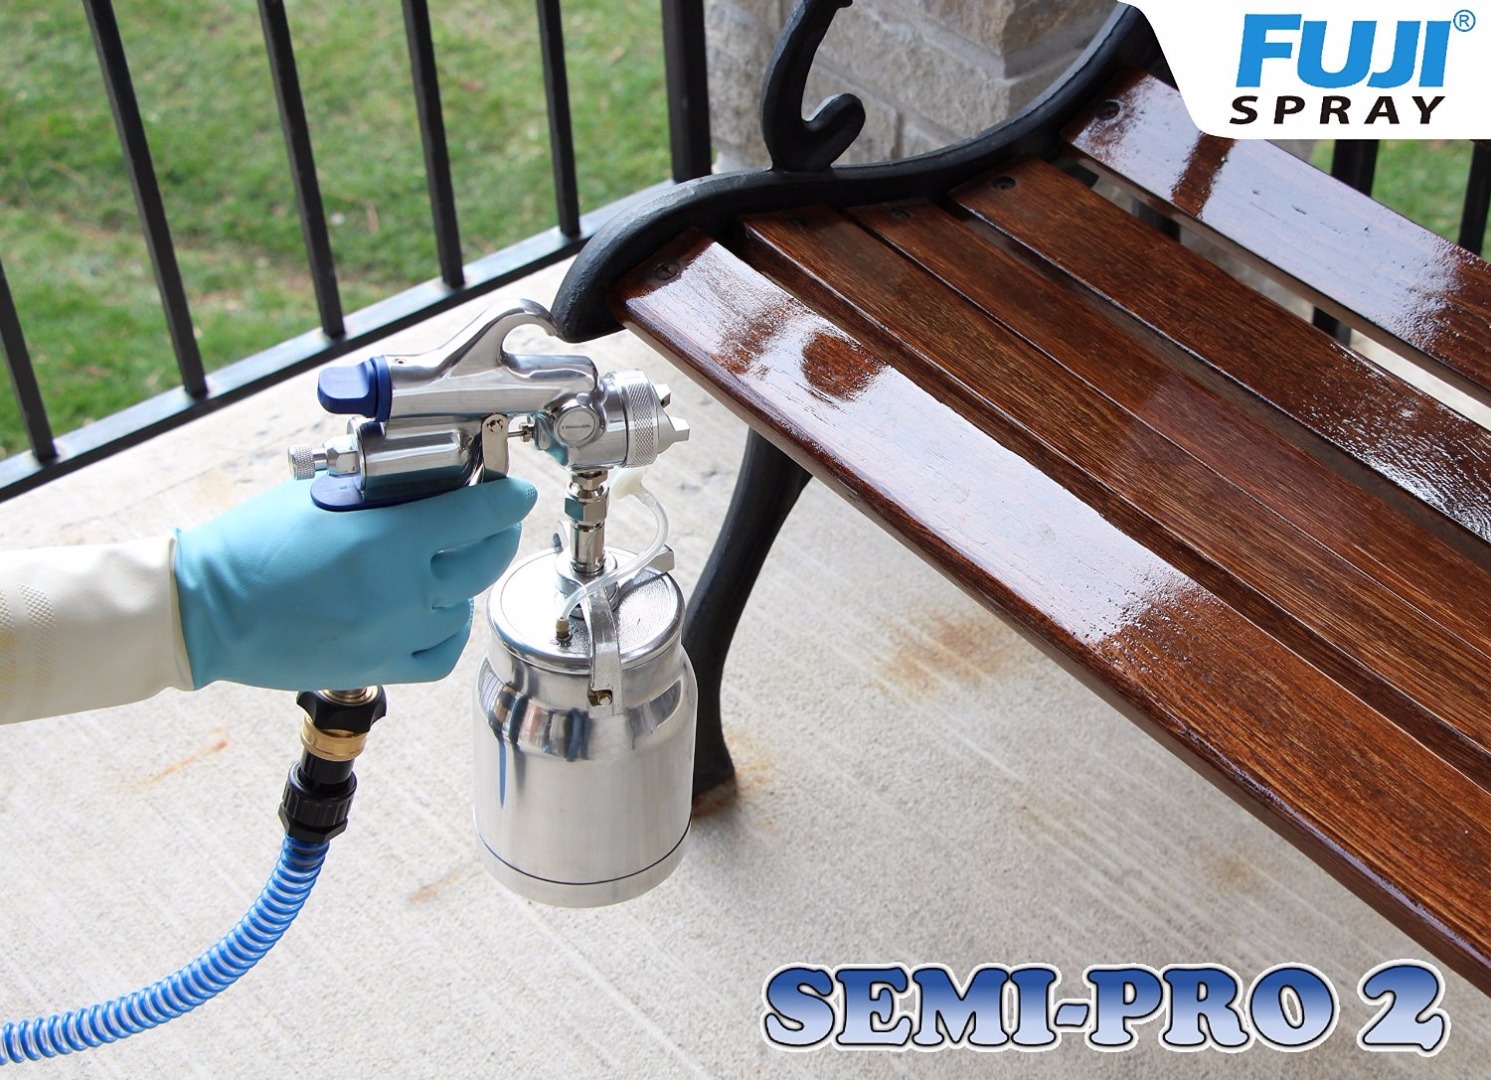 Fuji Spray Semi-PRO 2 HVLP Spray System, 2202 - image 2 of 3